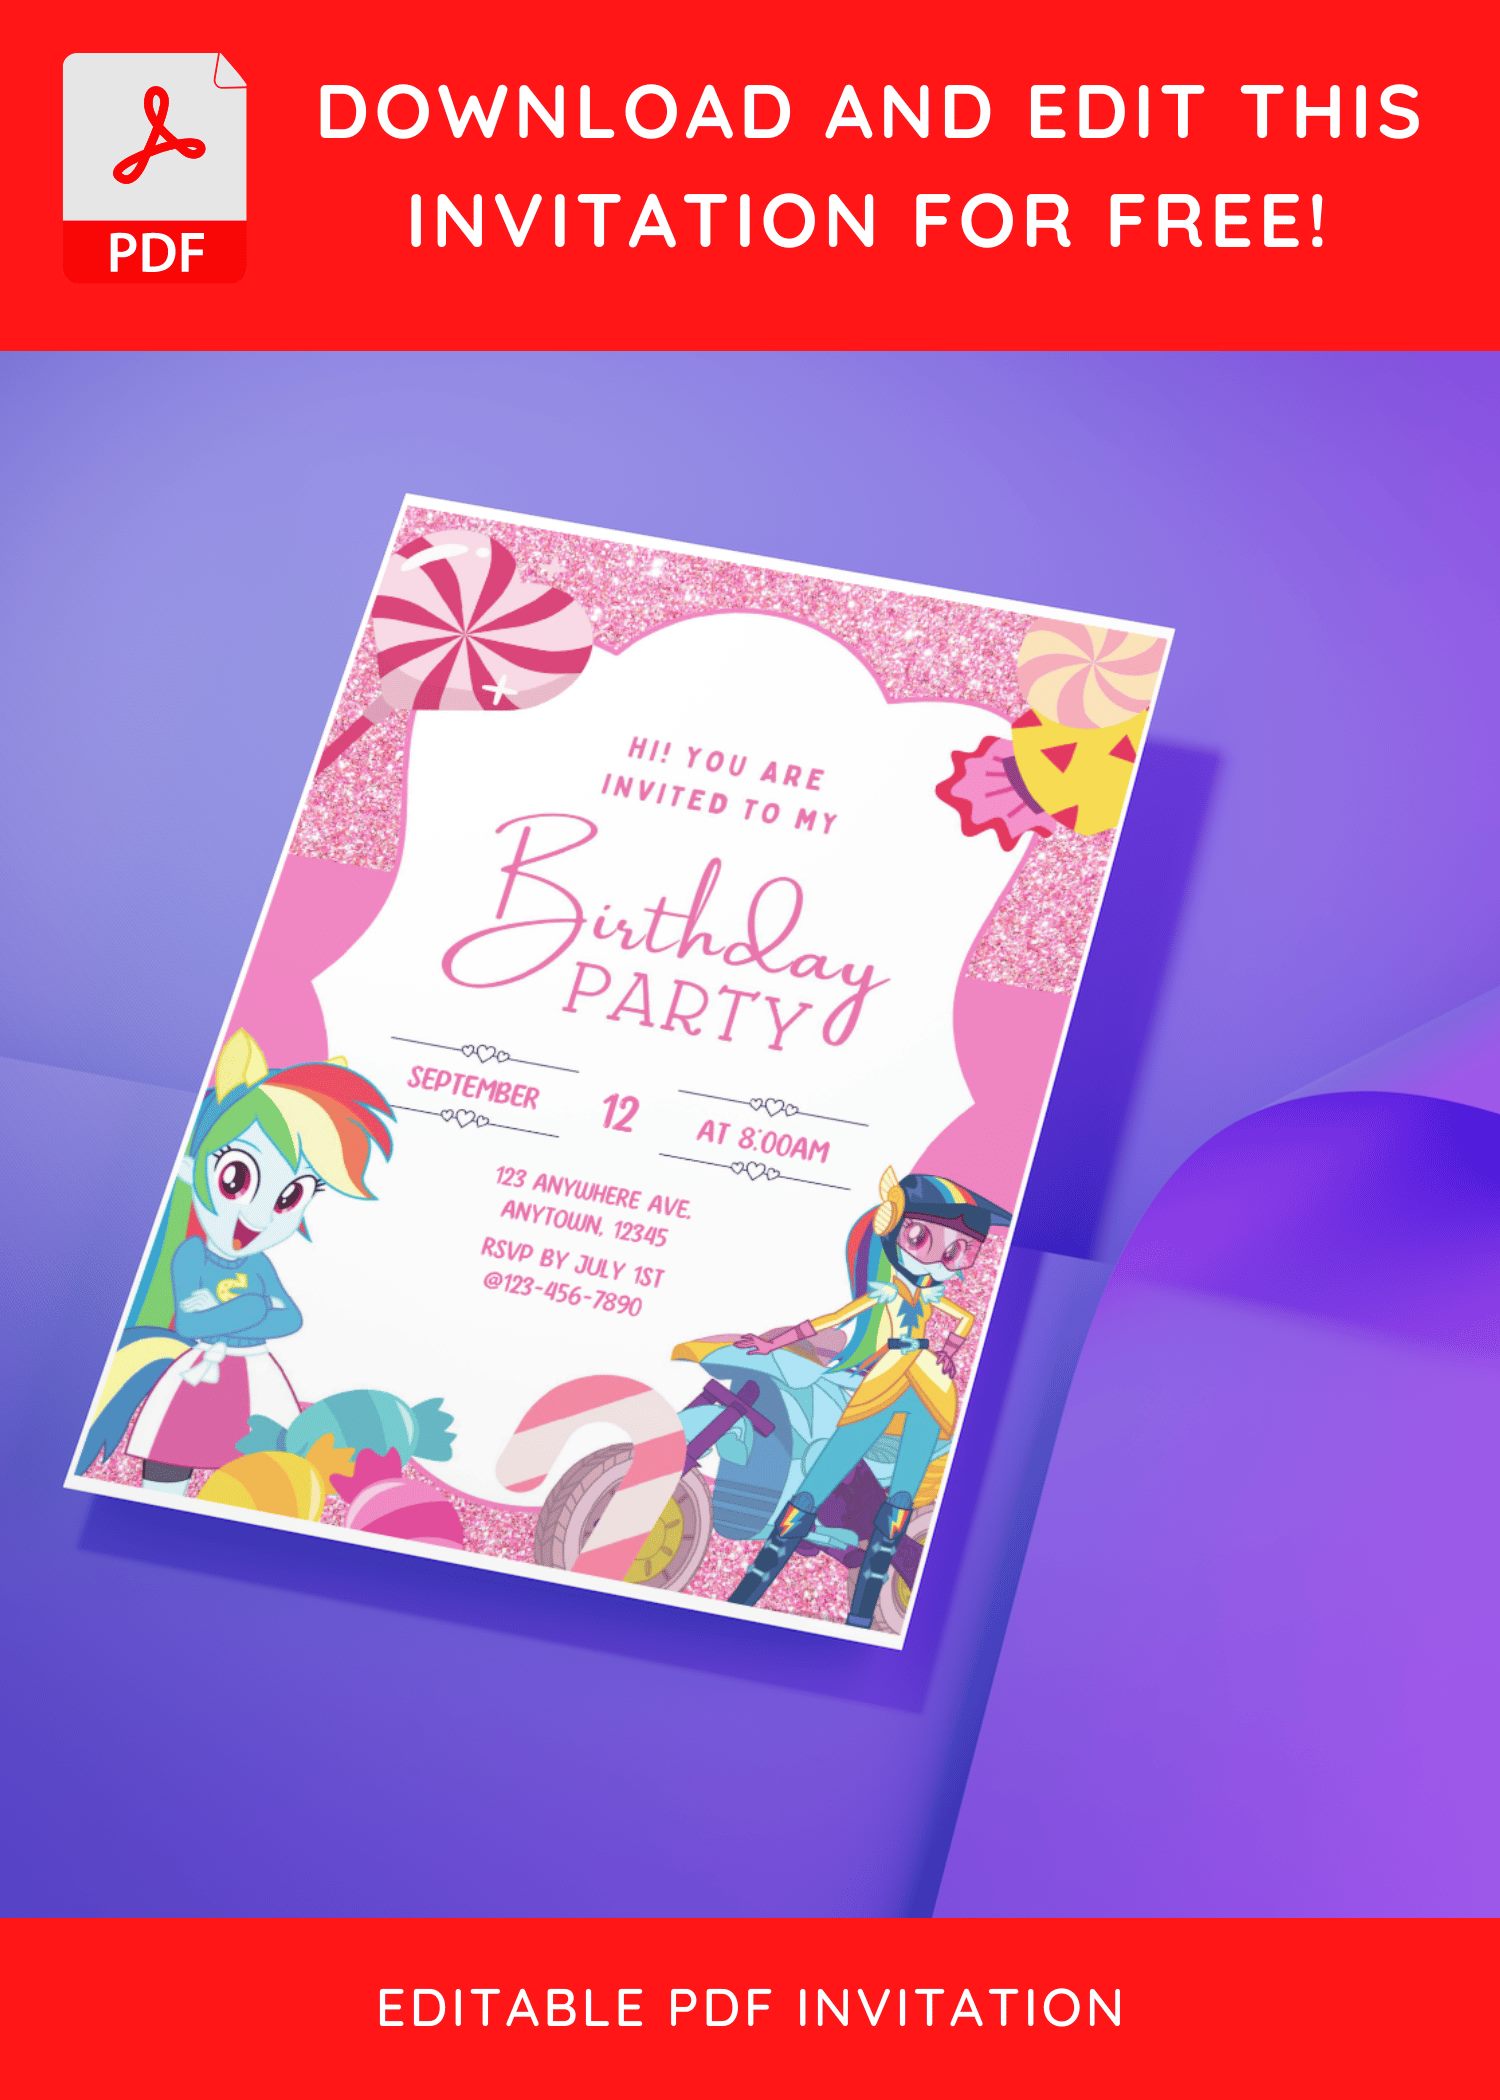 (Free Editable PDF) Pink Glitter My Little Pony Baby Shower Invitation Templates c